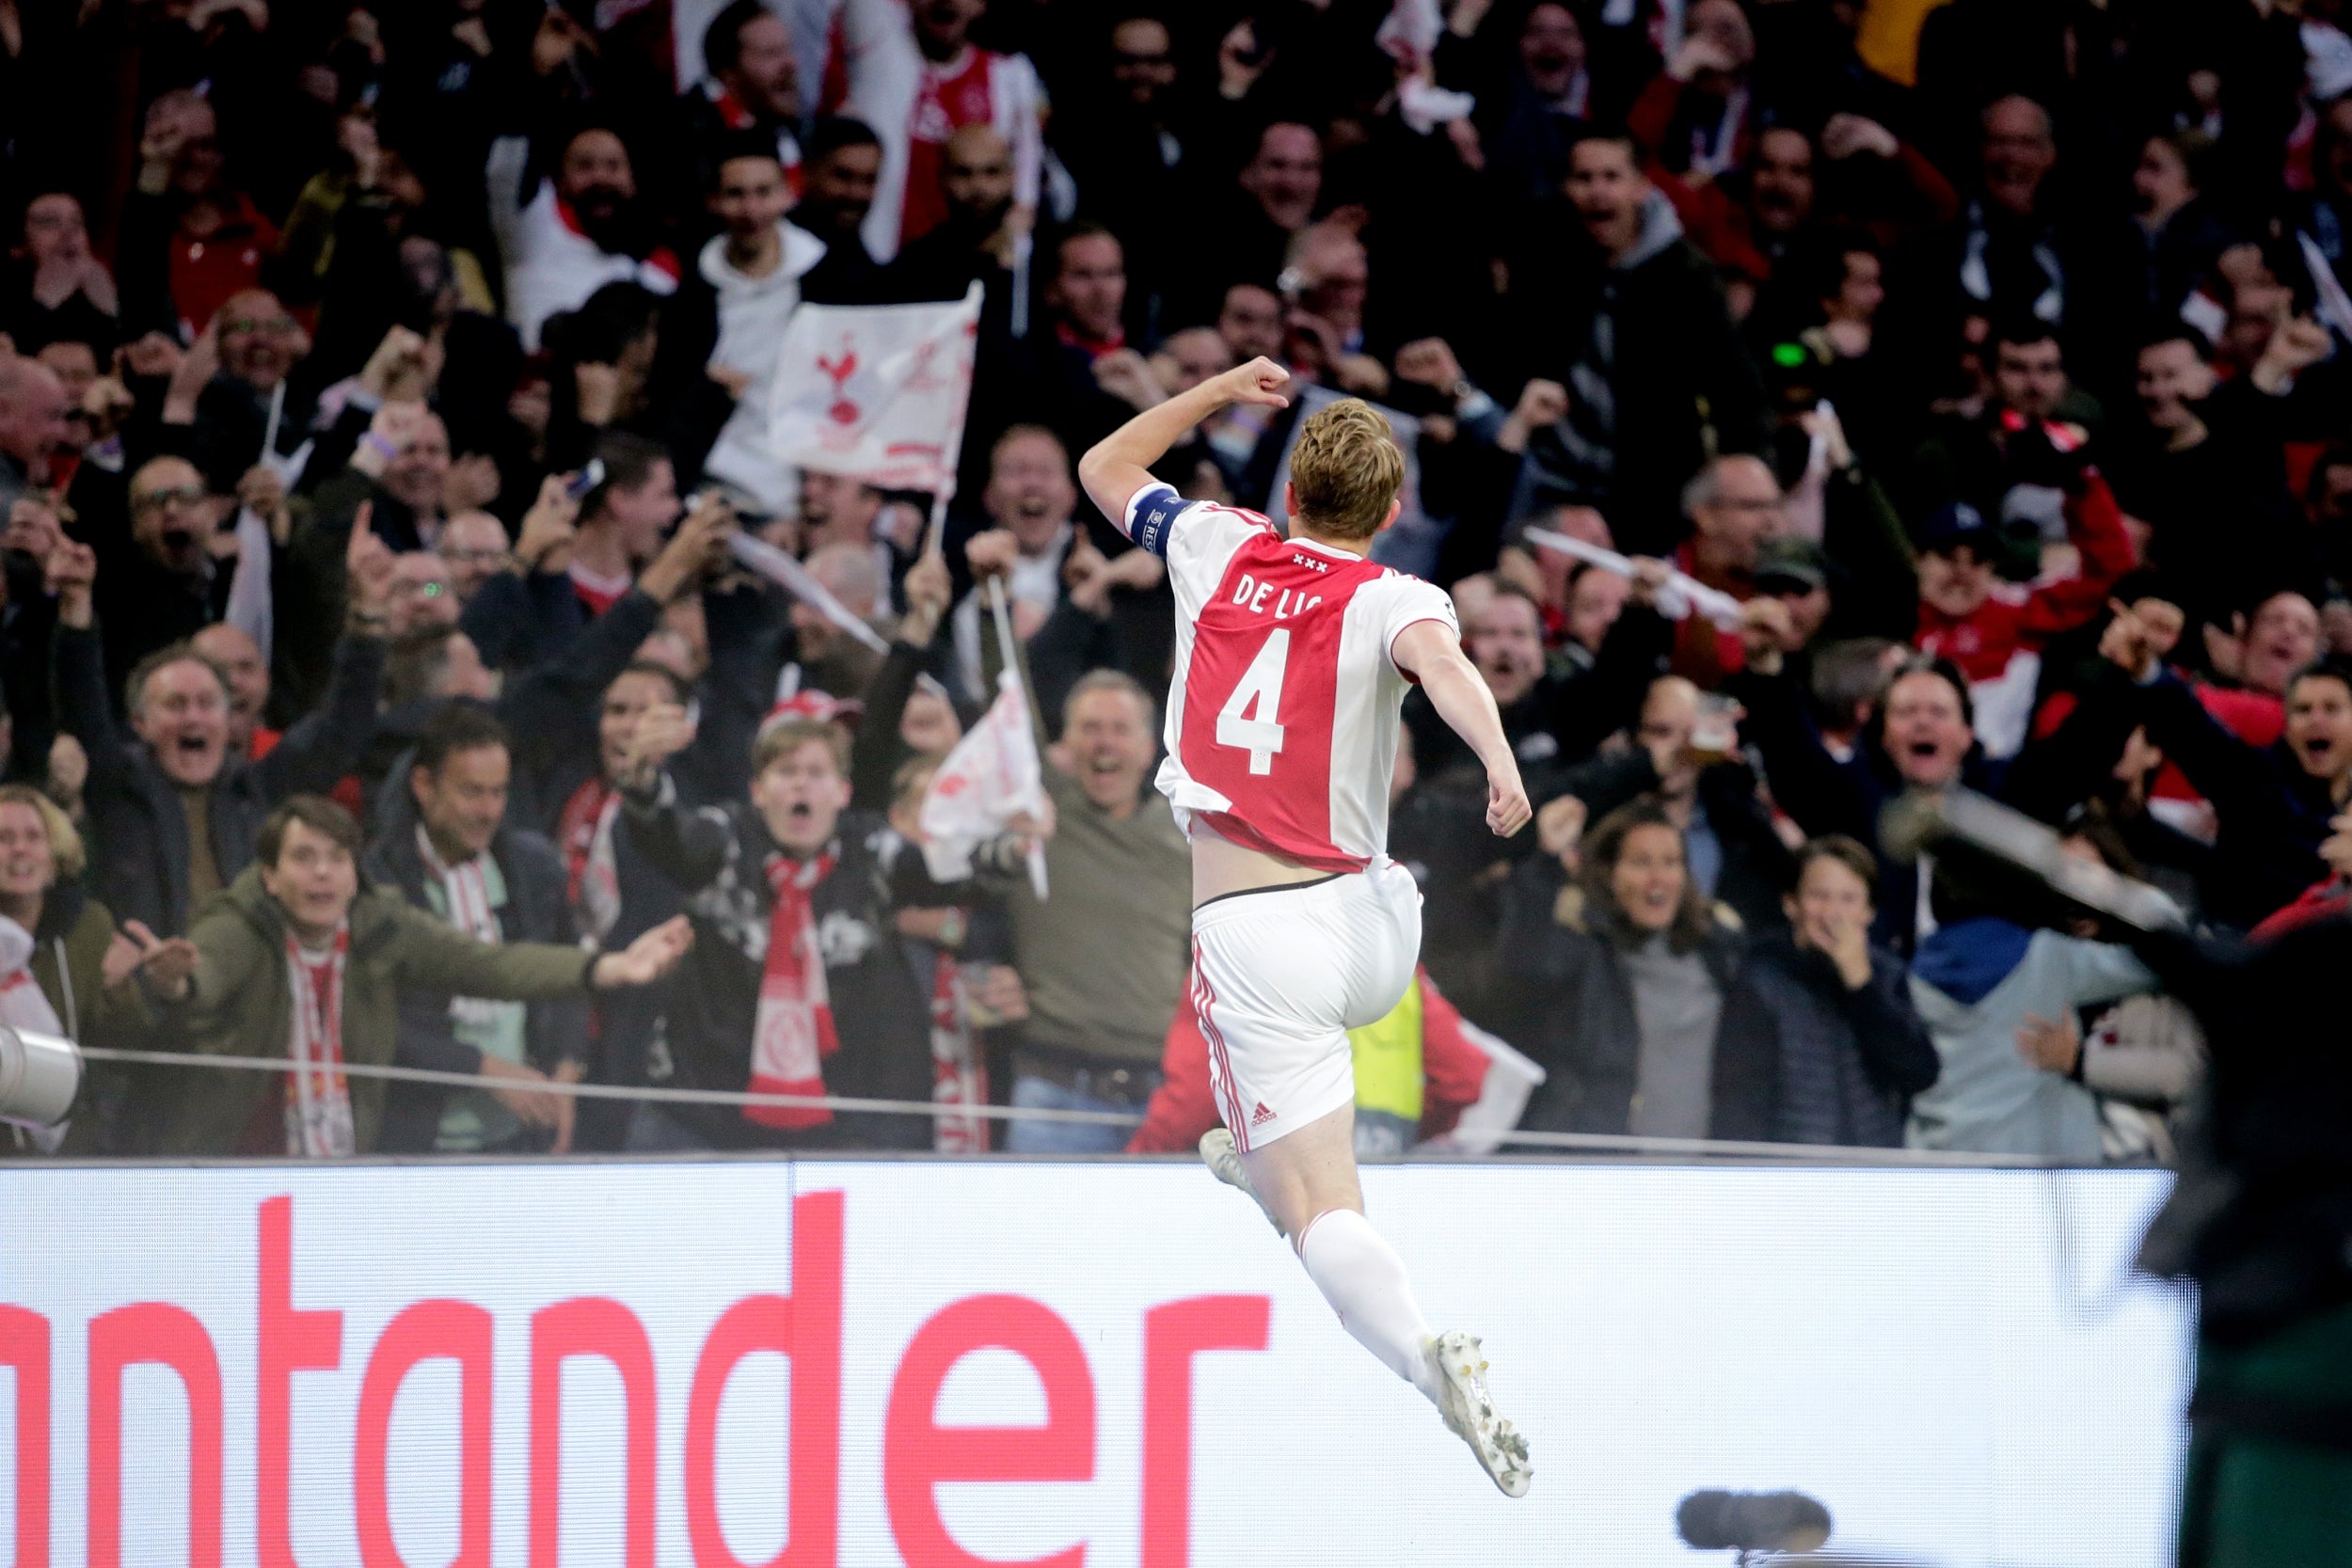 Ajax 2-3 Tottenham (3-3 on aggregate - Spurs win on away goals